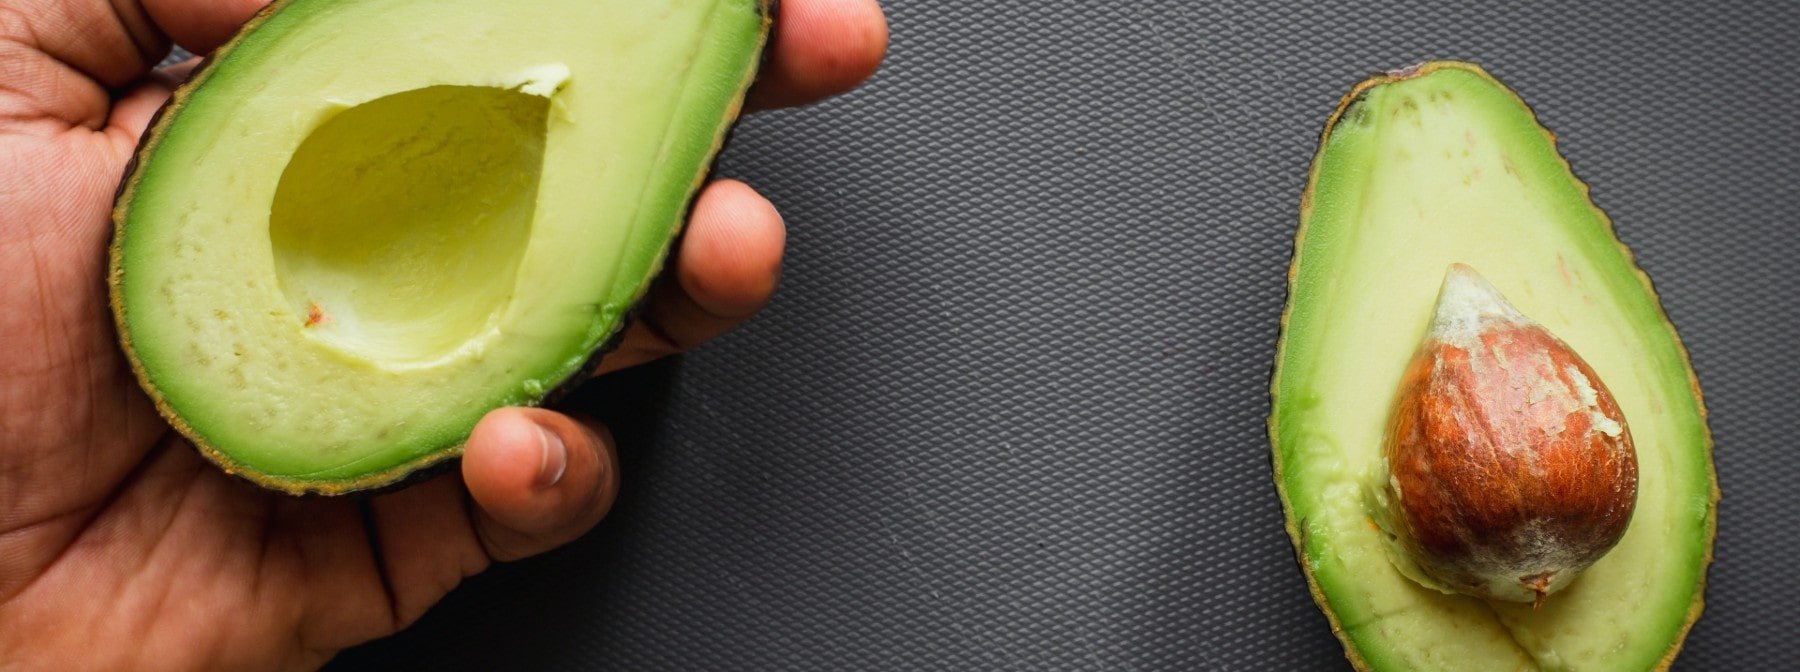 5 Health Benefits Of Avocados